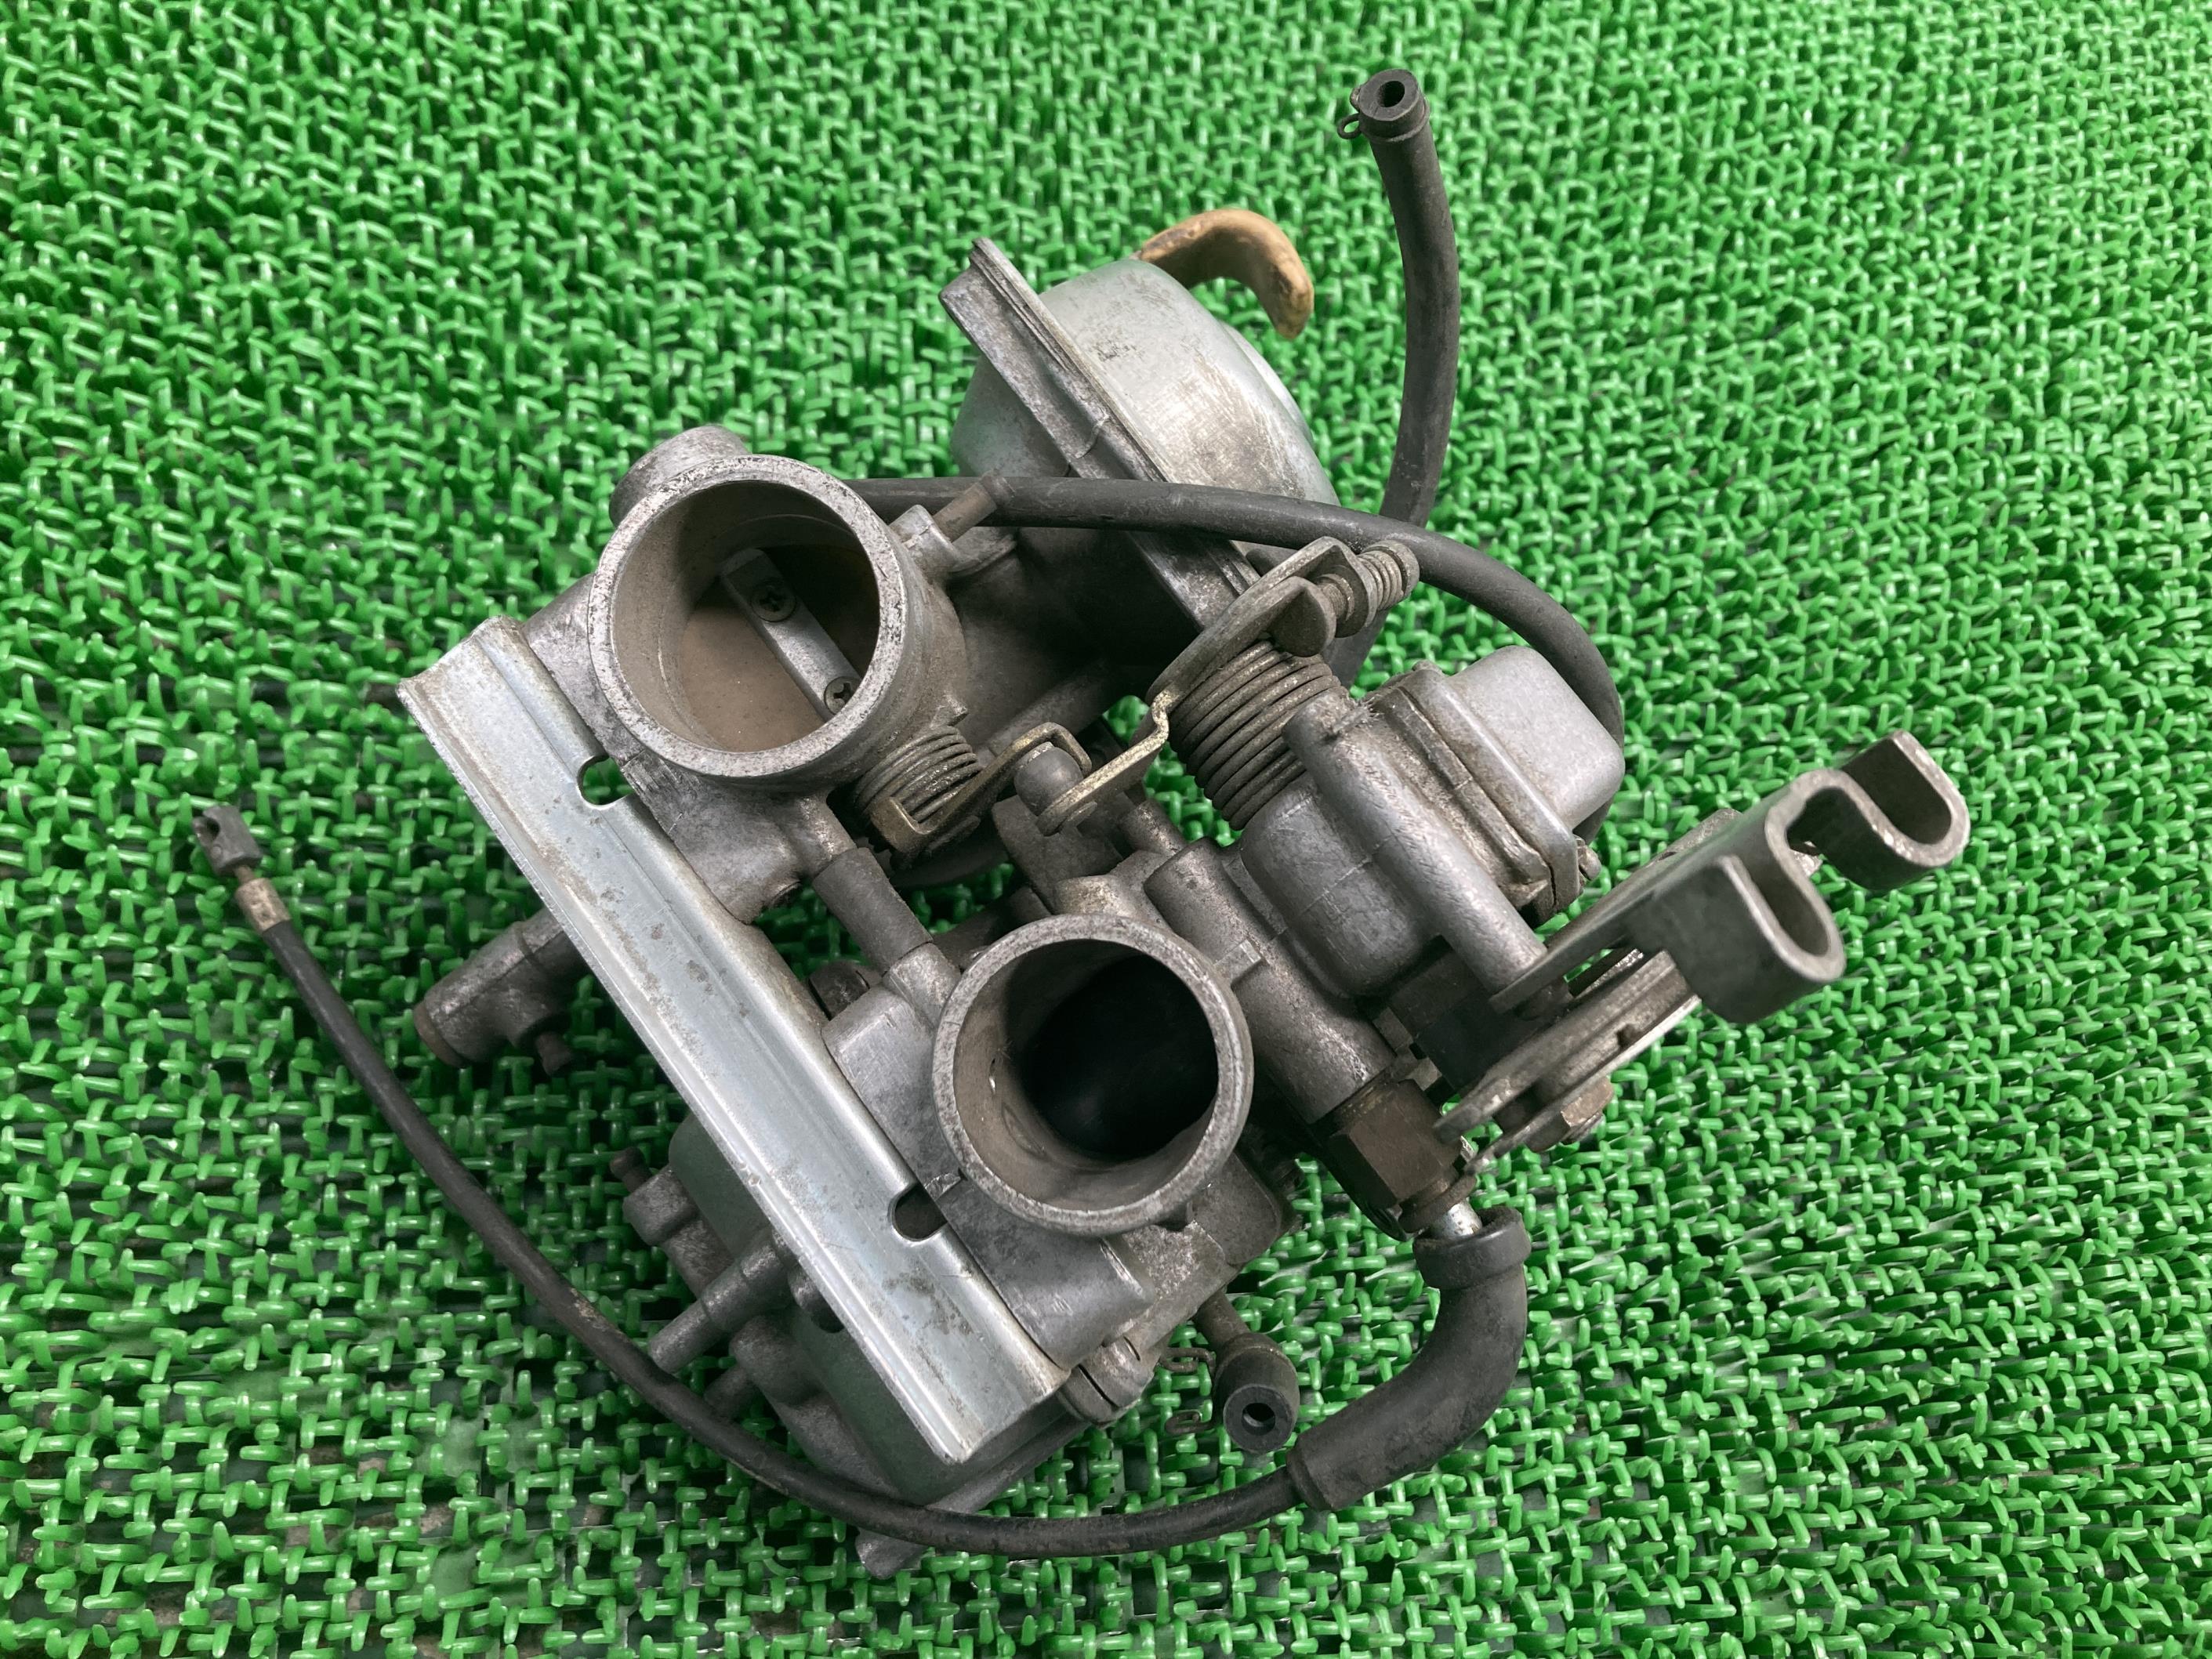 SRX400 carburetor Yamaha original used bike parts 1JL SRX-4 YDSL restoration material . no cracking chipping shortage of stock vehicle inspection "shaken" Genuine